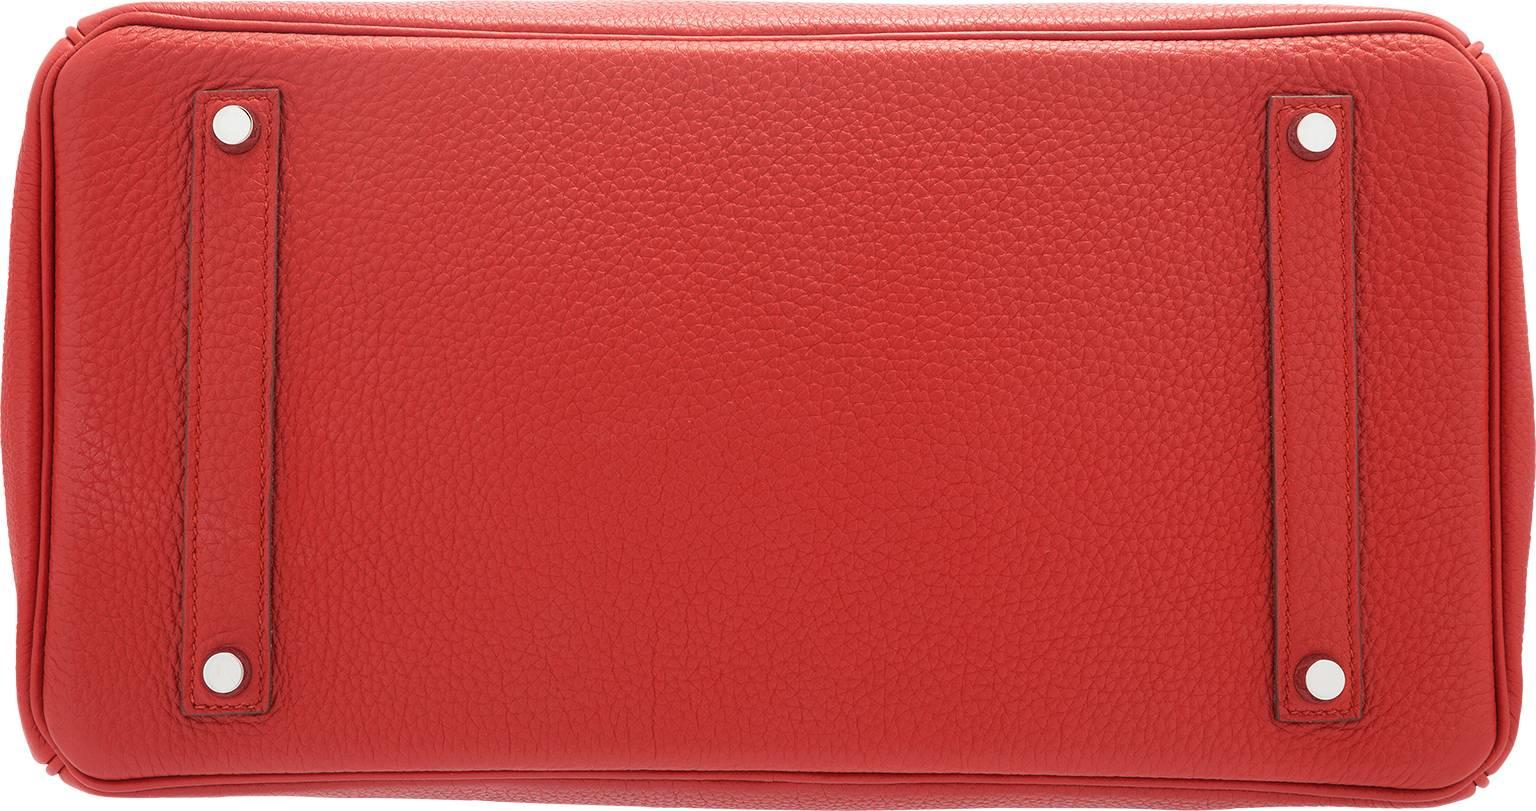 Women's Hermes 35cm Rouge Garance Togo Leather Birkin Bag with Palladium Hardware